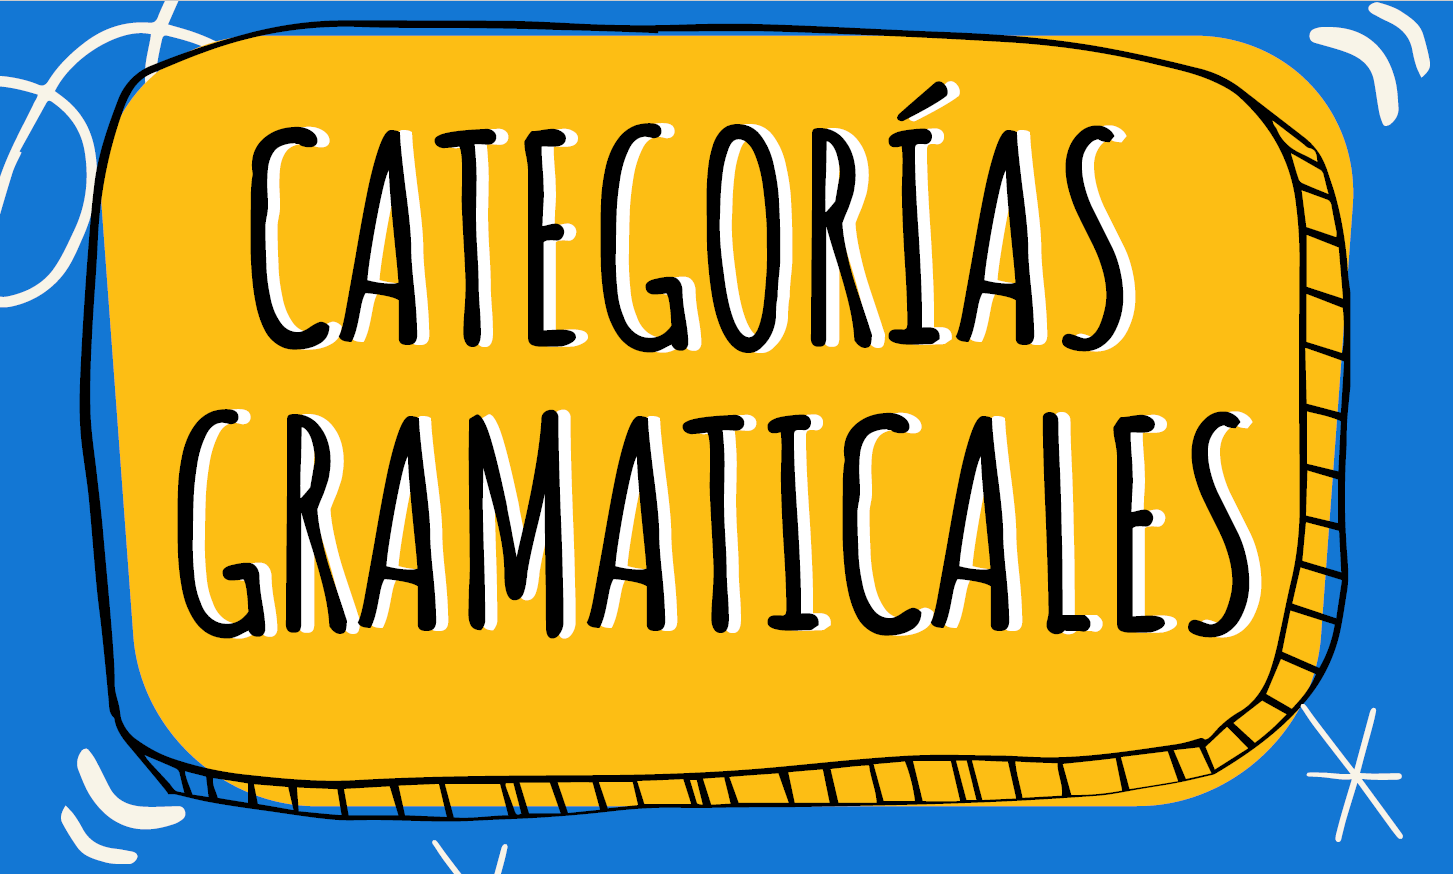 Categorias Gramaticales Arts Quizizz